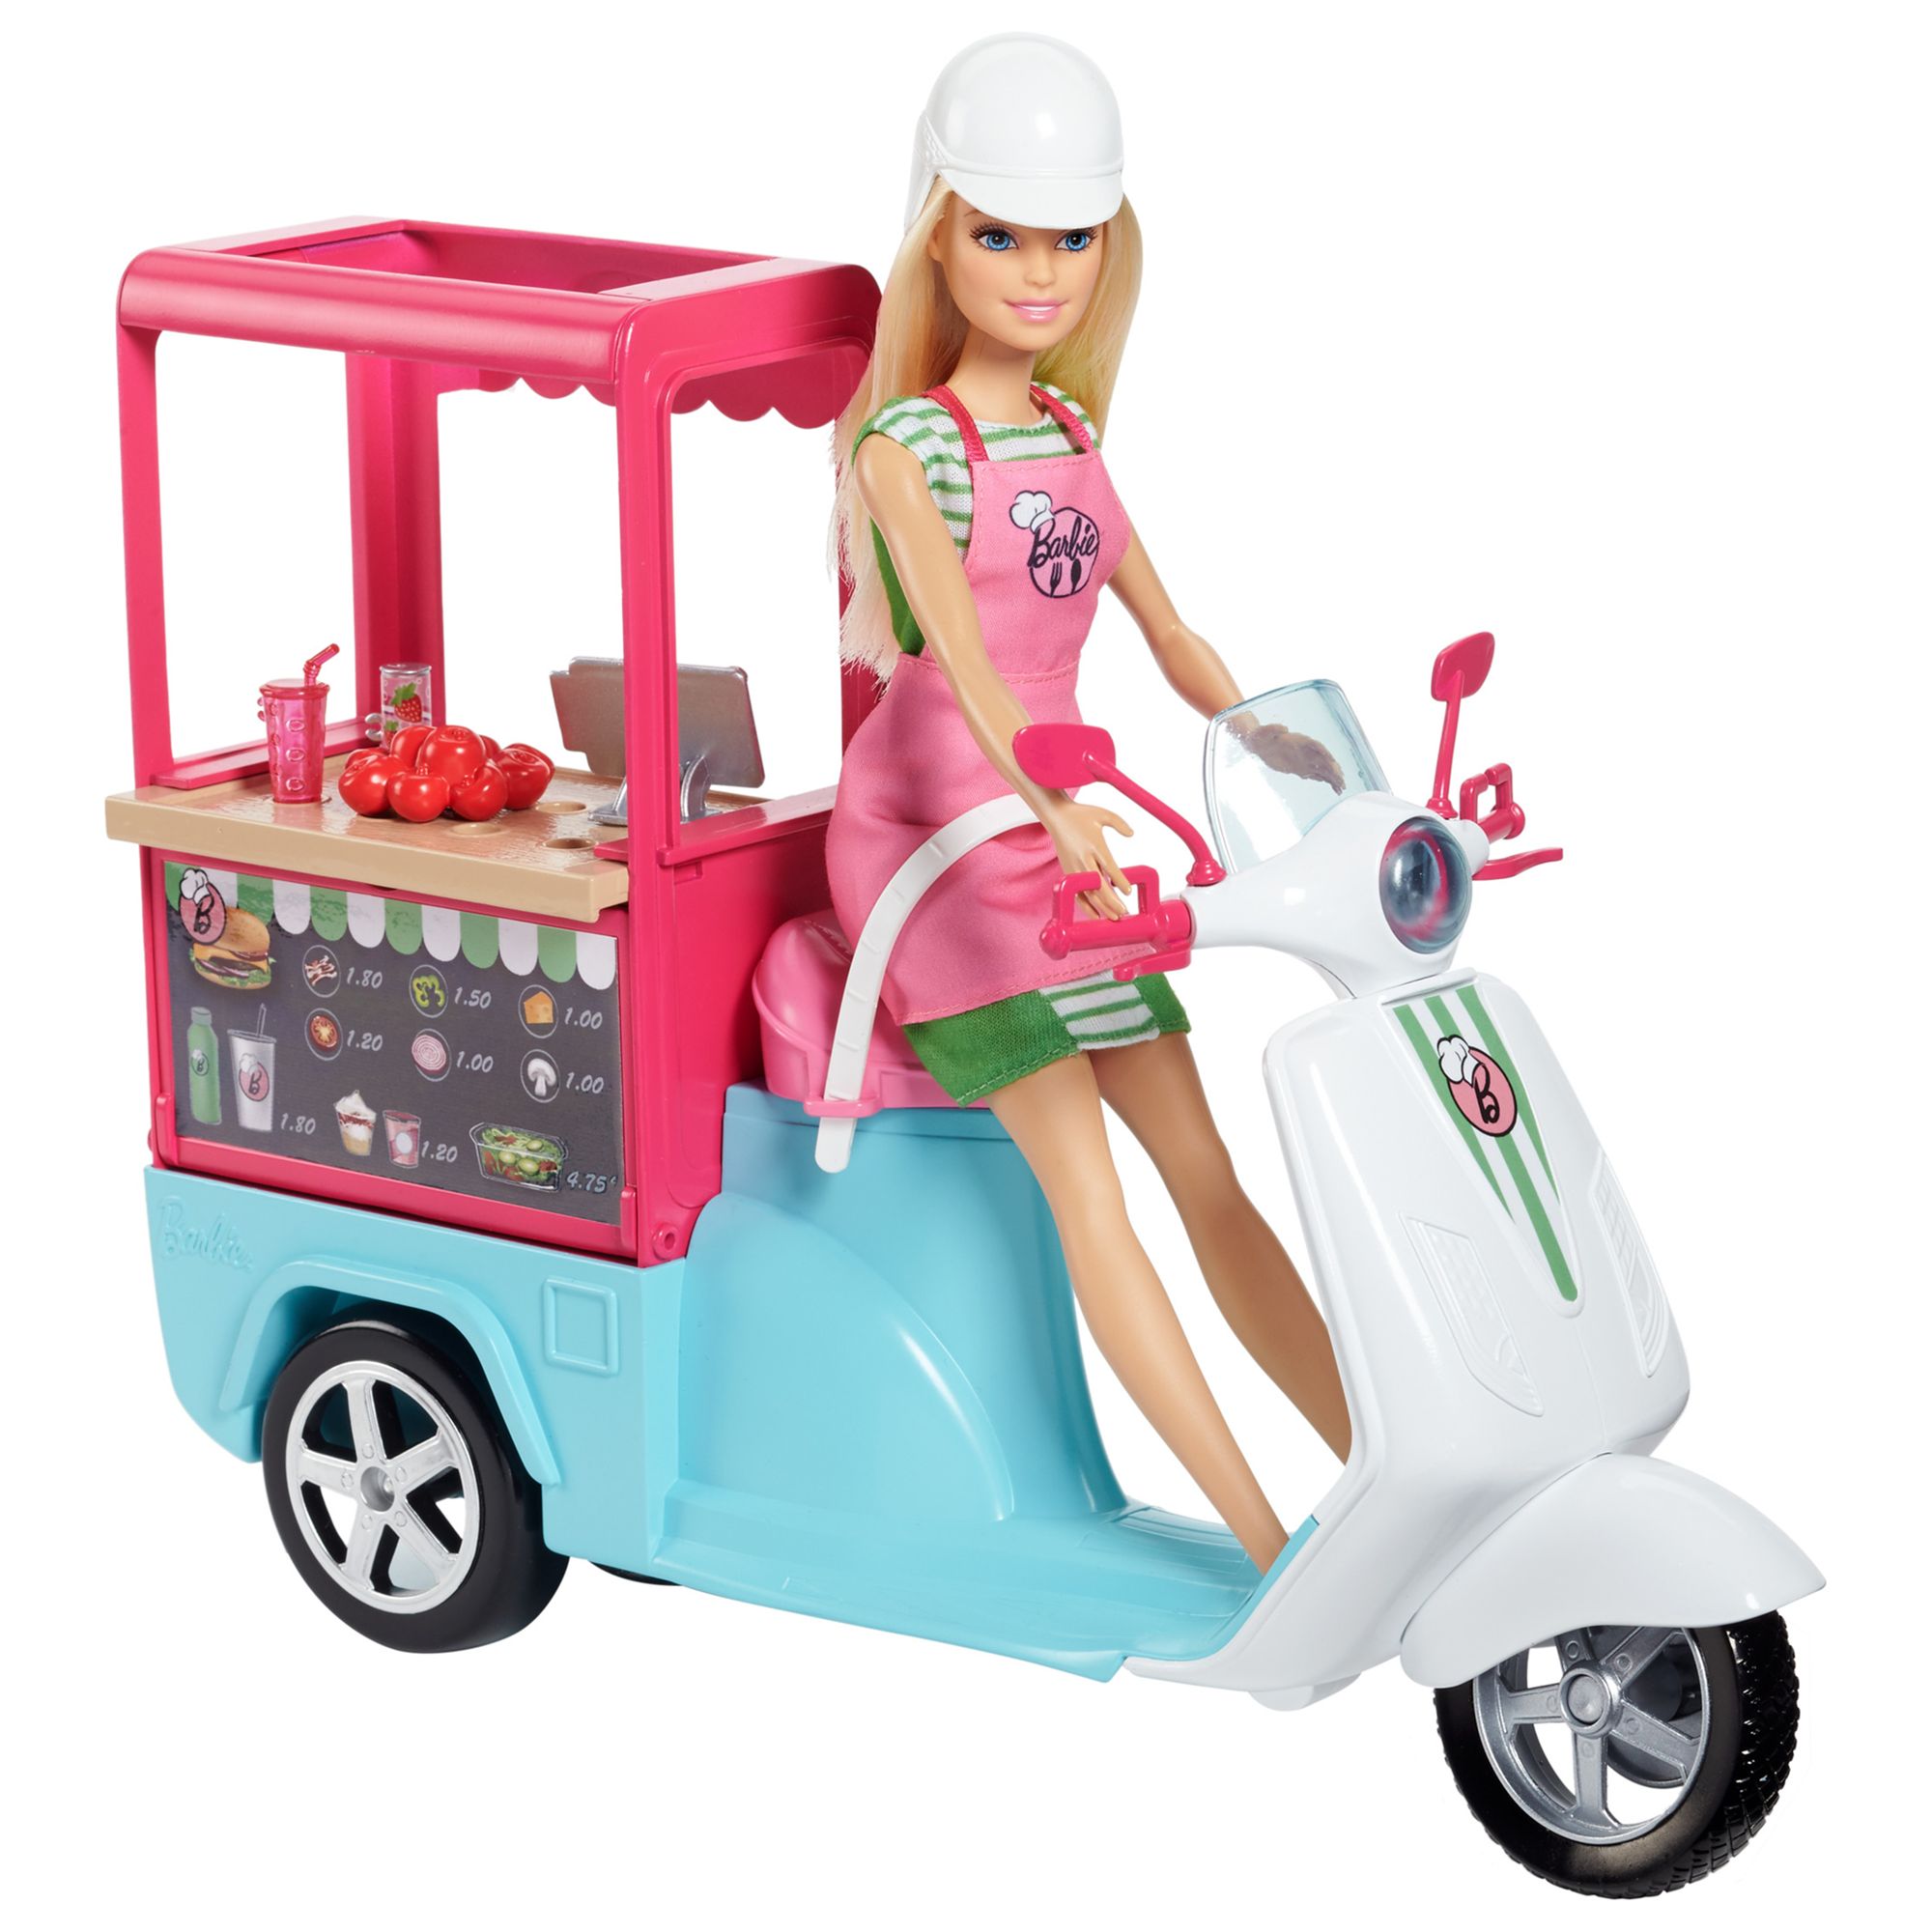 Барби 8 лет. Скутер Barbie бистро fhr08. Игрушки Барби. Игровой набор Барби. Игрушки для девочек Барби.